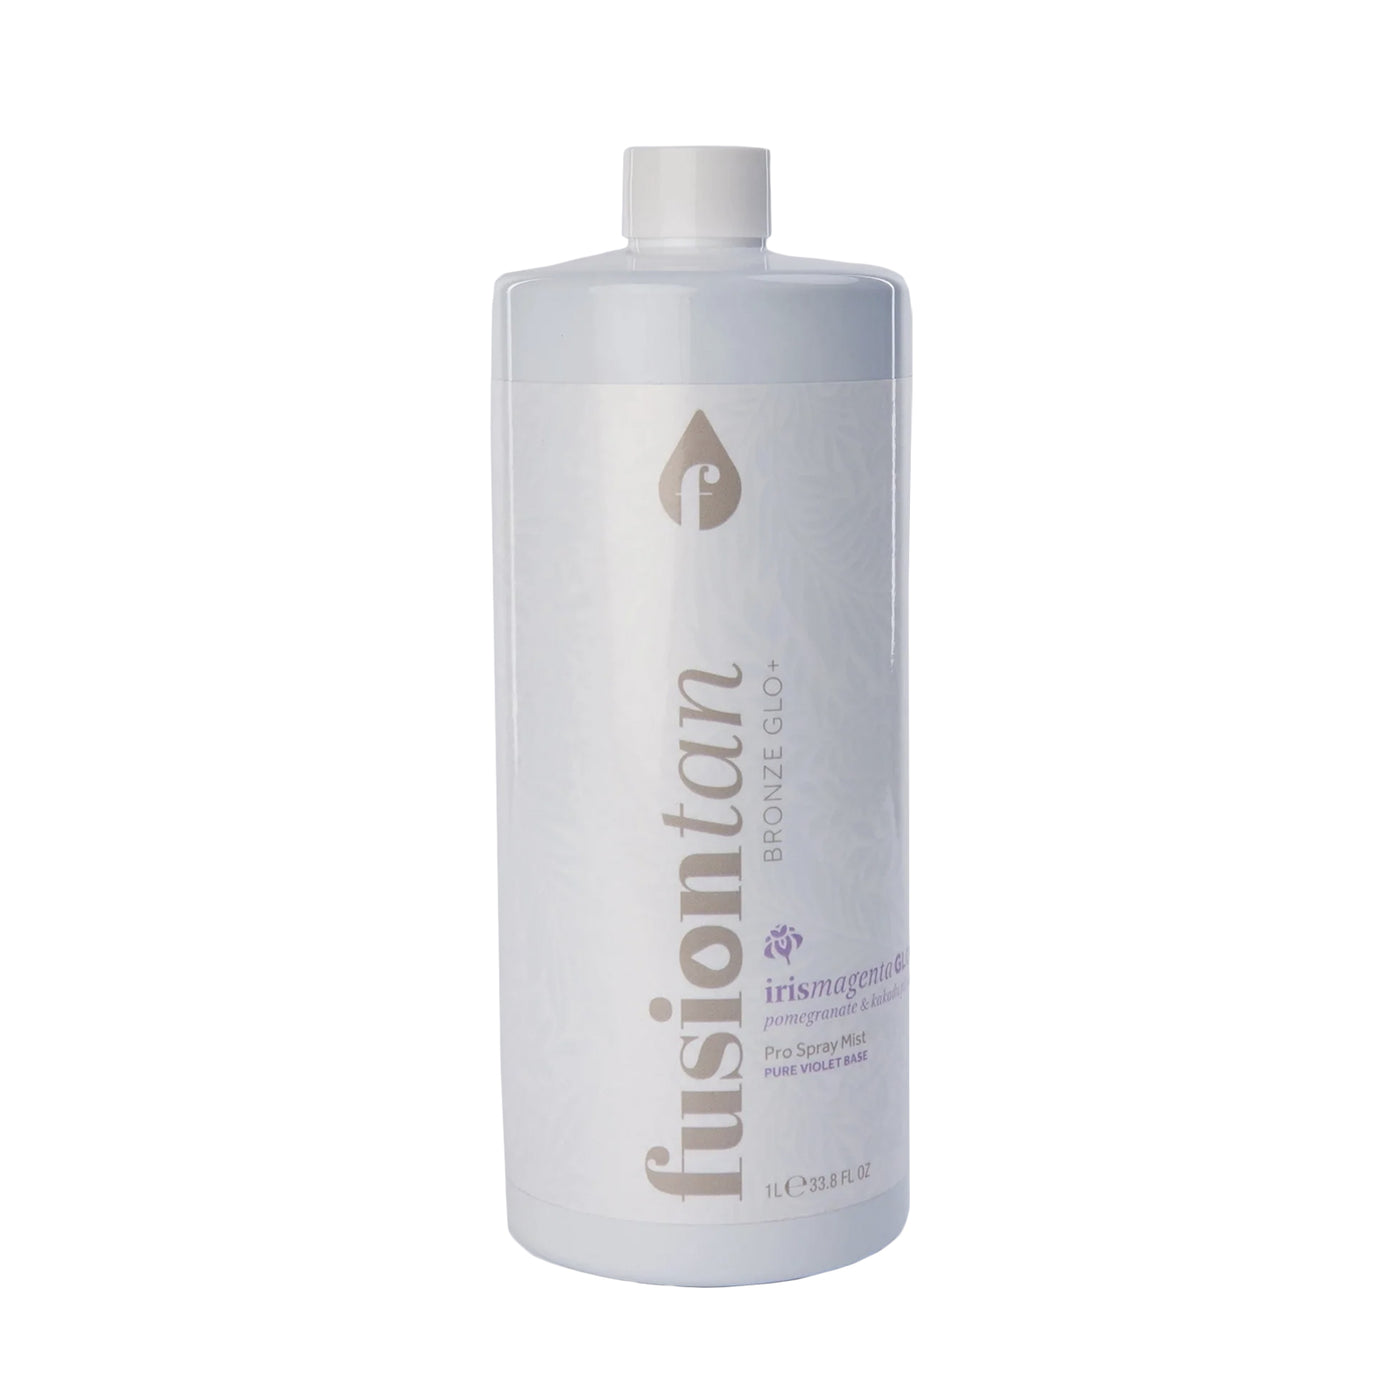 Fusion Tan Bronze IRISmagenta GLO+ Pro Spray Tan Mist